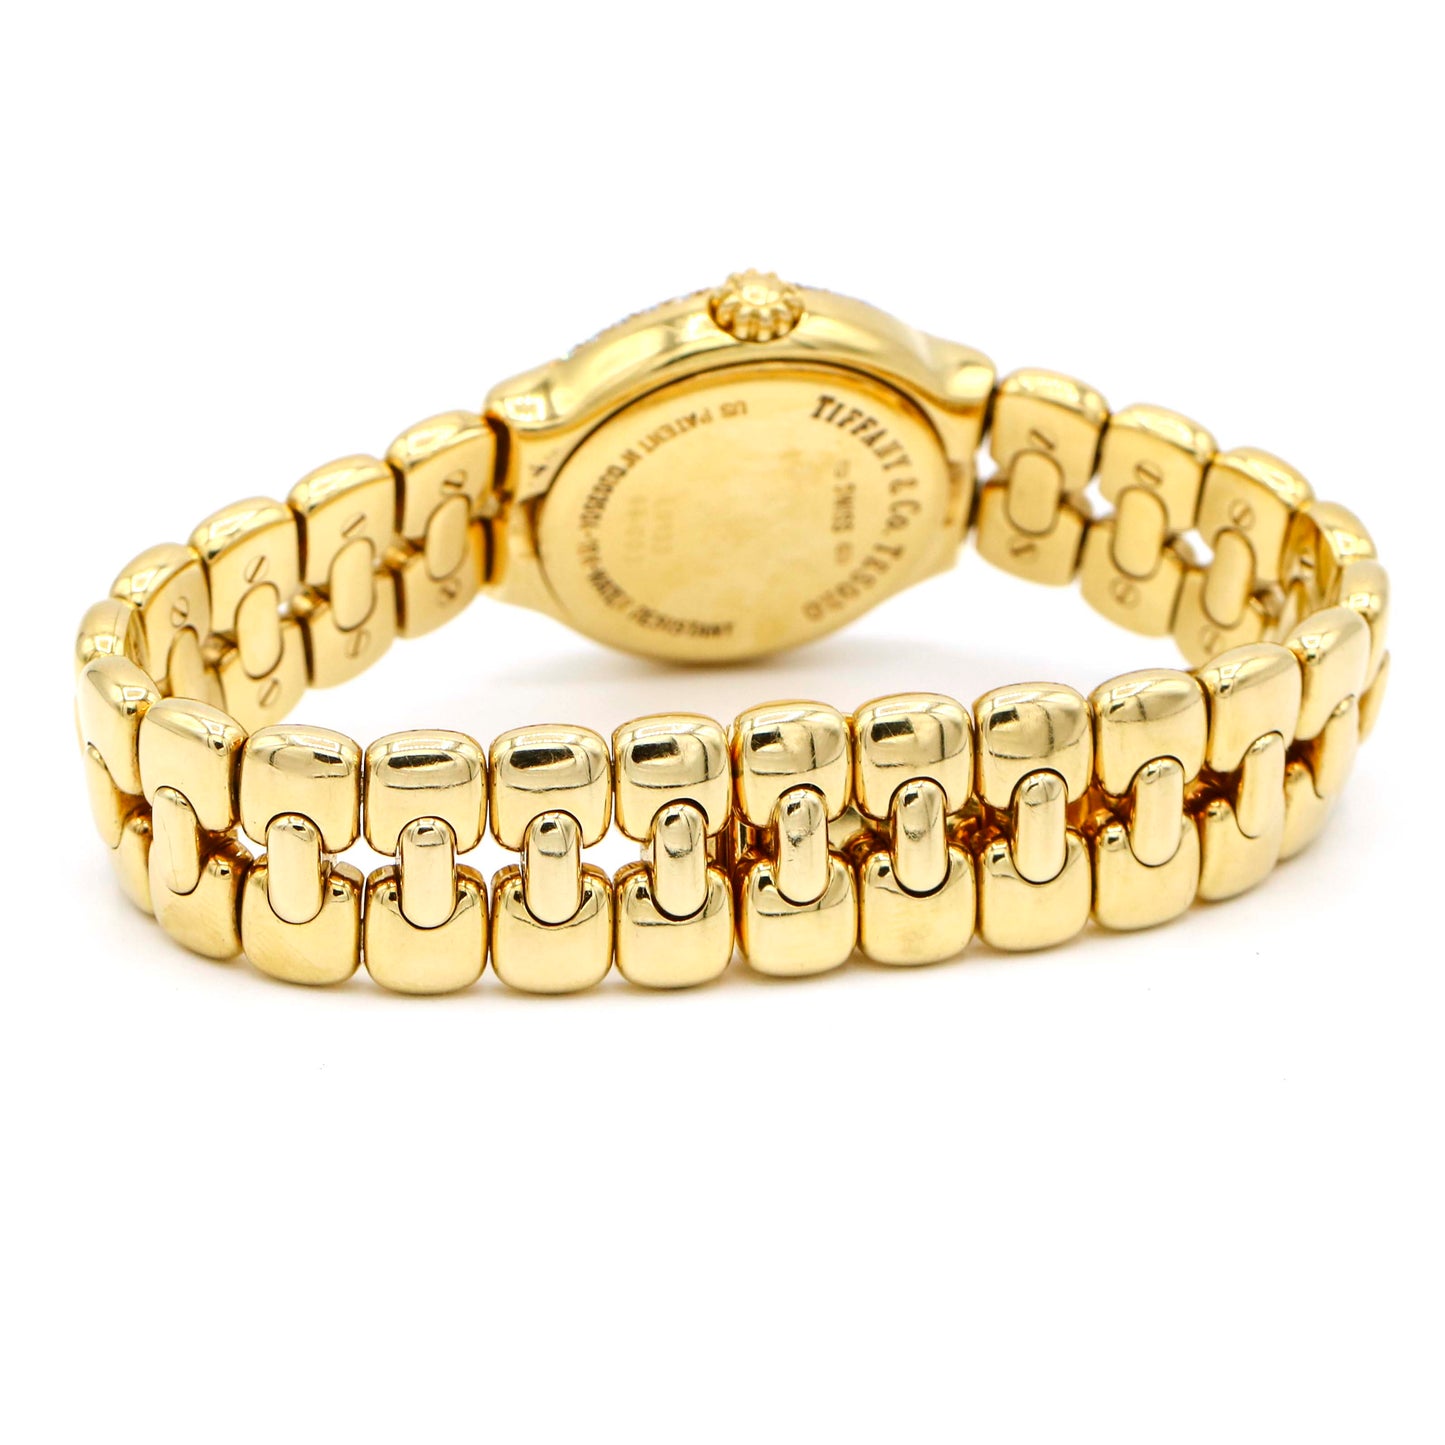 Tiffany & Co. Ladies 18k Gold Tesoro Watch with Diamond Bezel and Dial